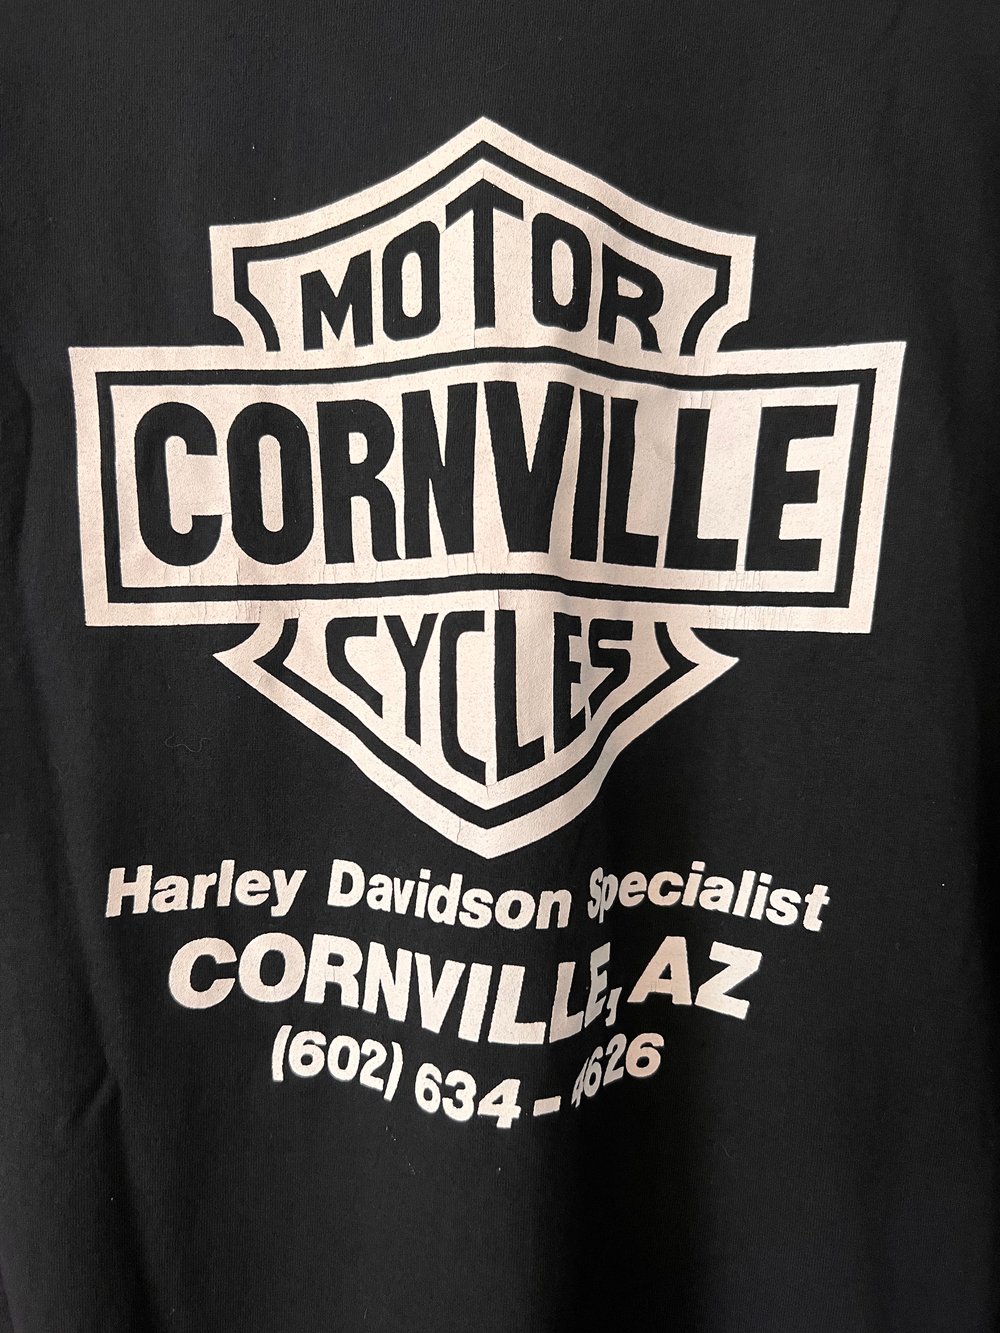 Vintage Cornville Harley Tee (XL)